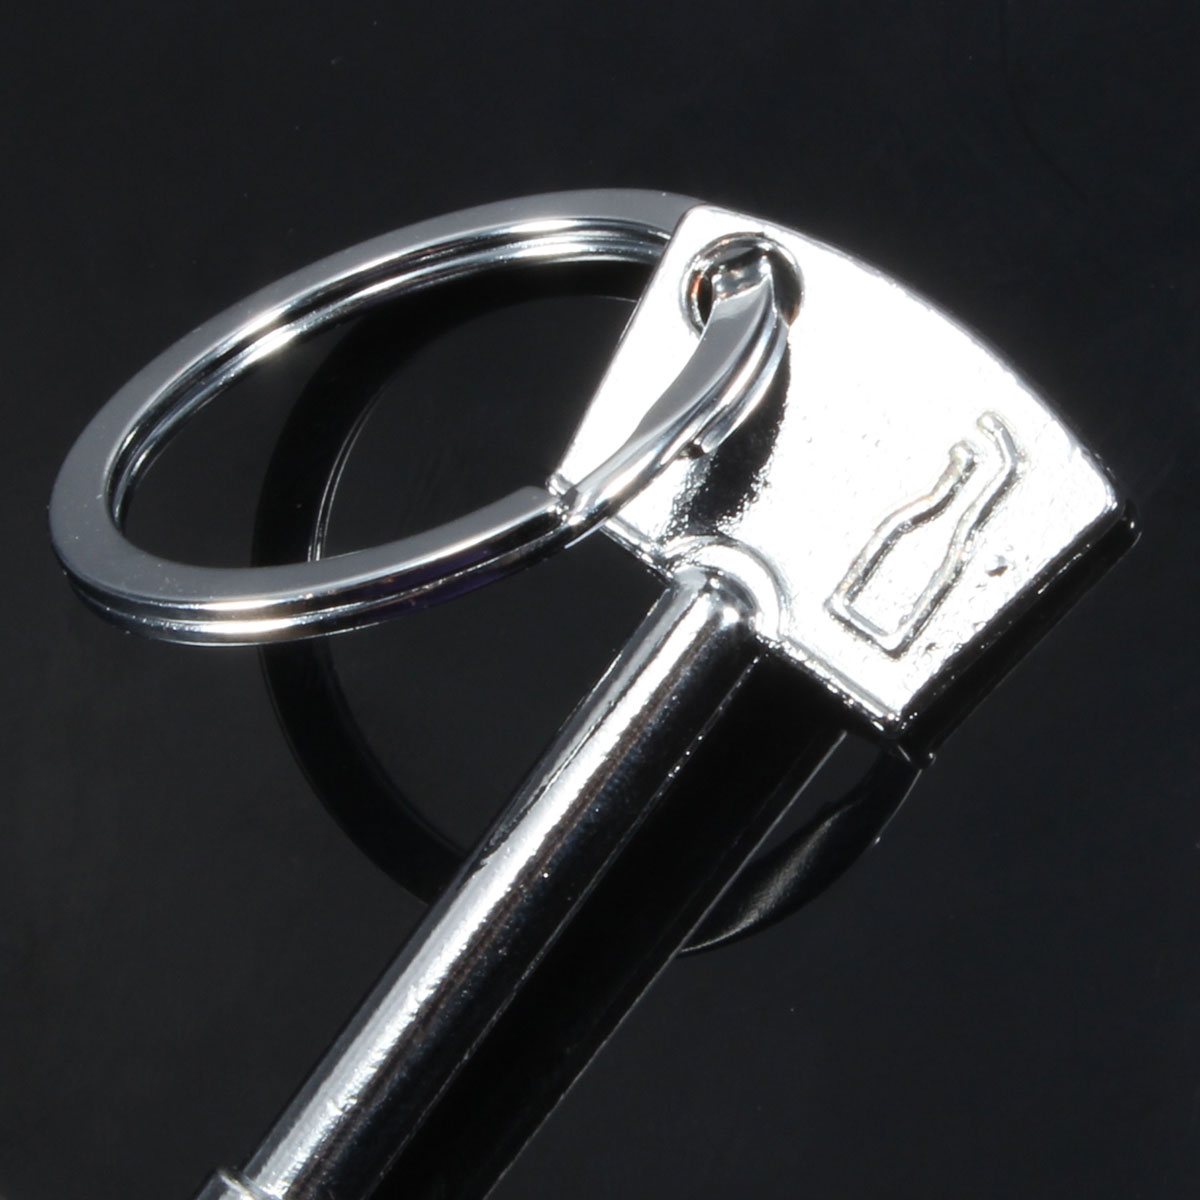 Key-Shaped-Bottle-Opener-Ring-Keyring-Chain-Keychain-Metal-Beer-Bar-Tool-1050024